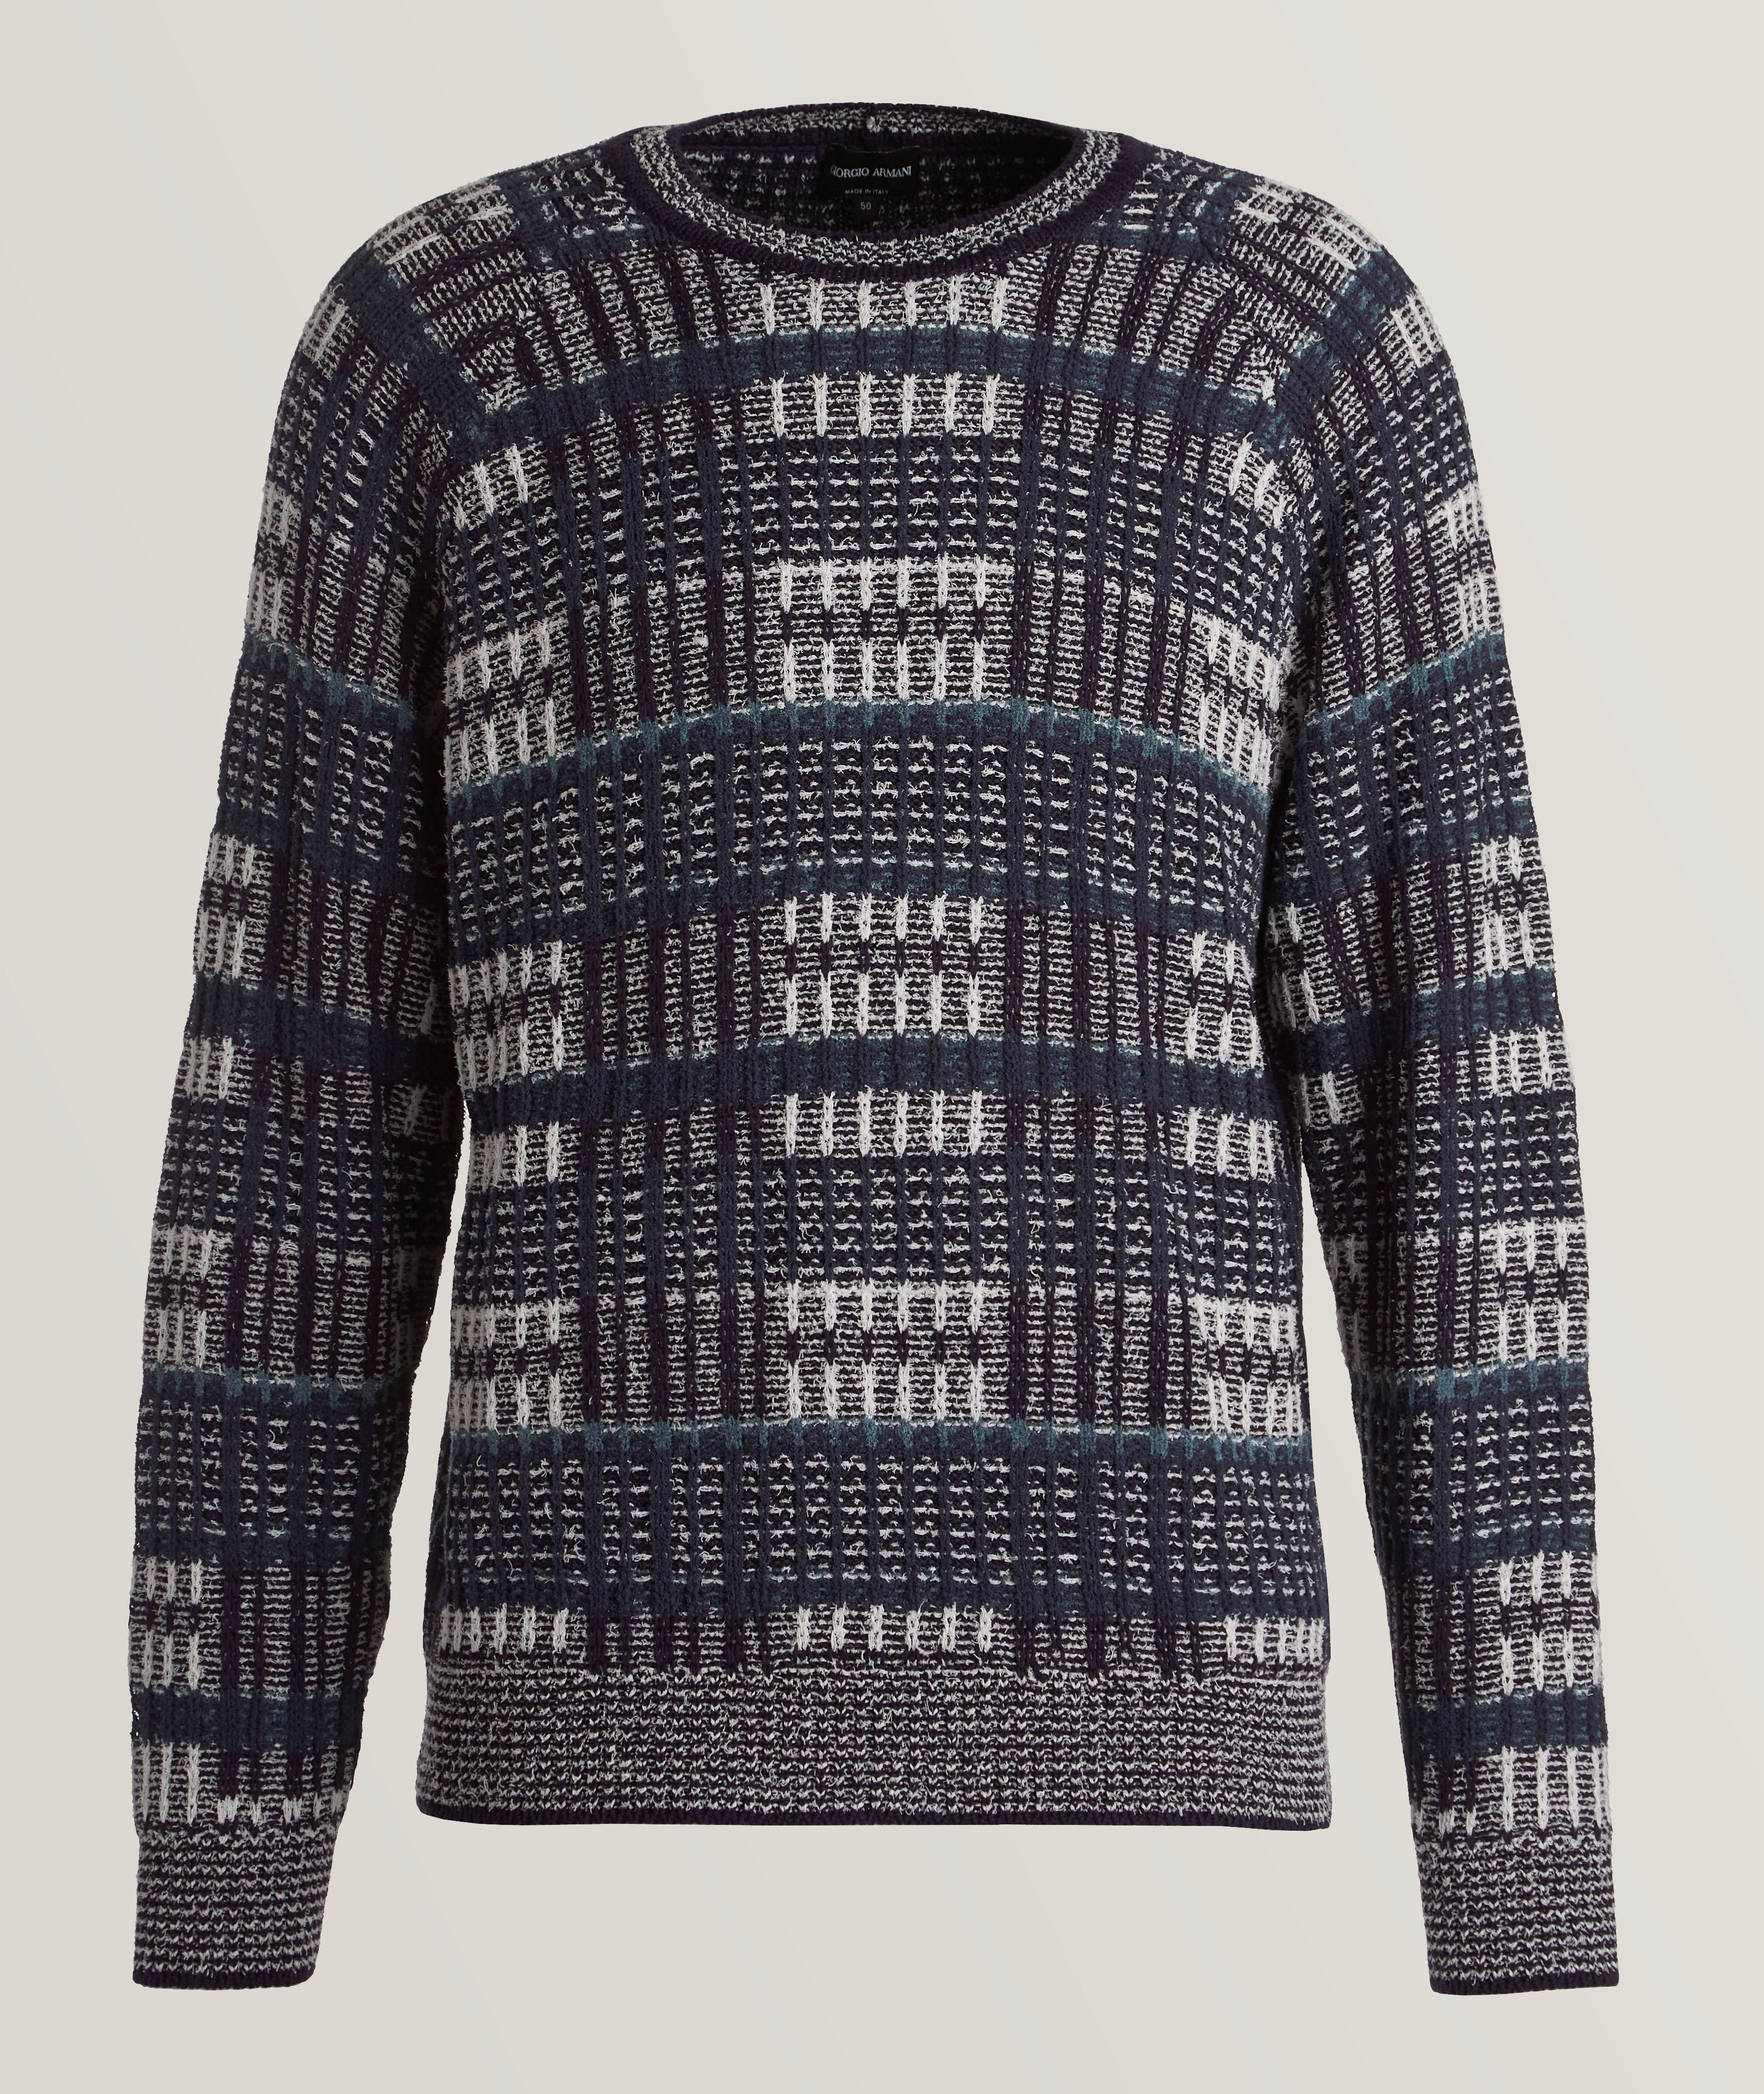 Retro Plaid Jacquard Print Sweater image 0